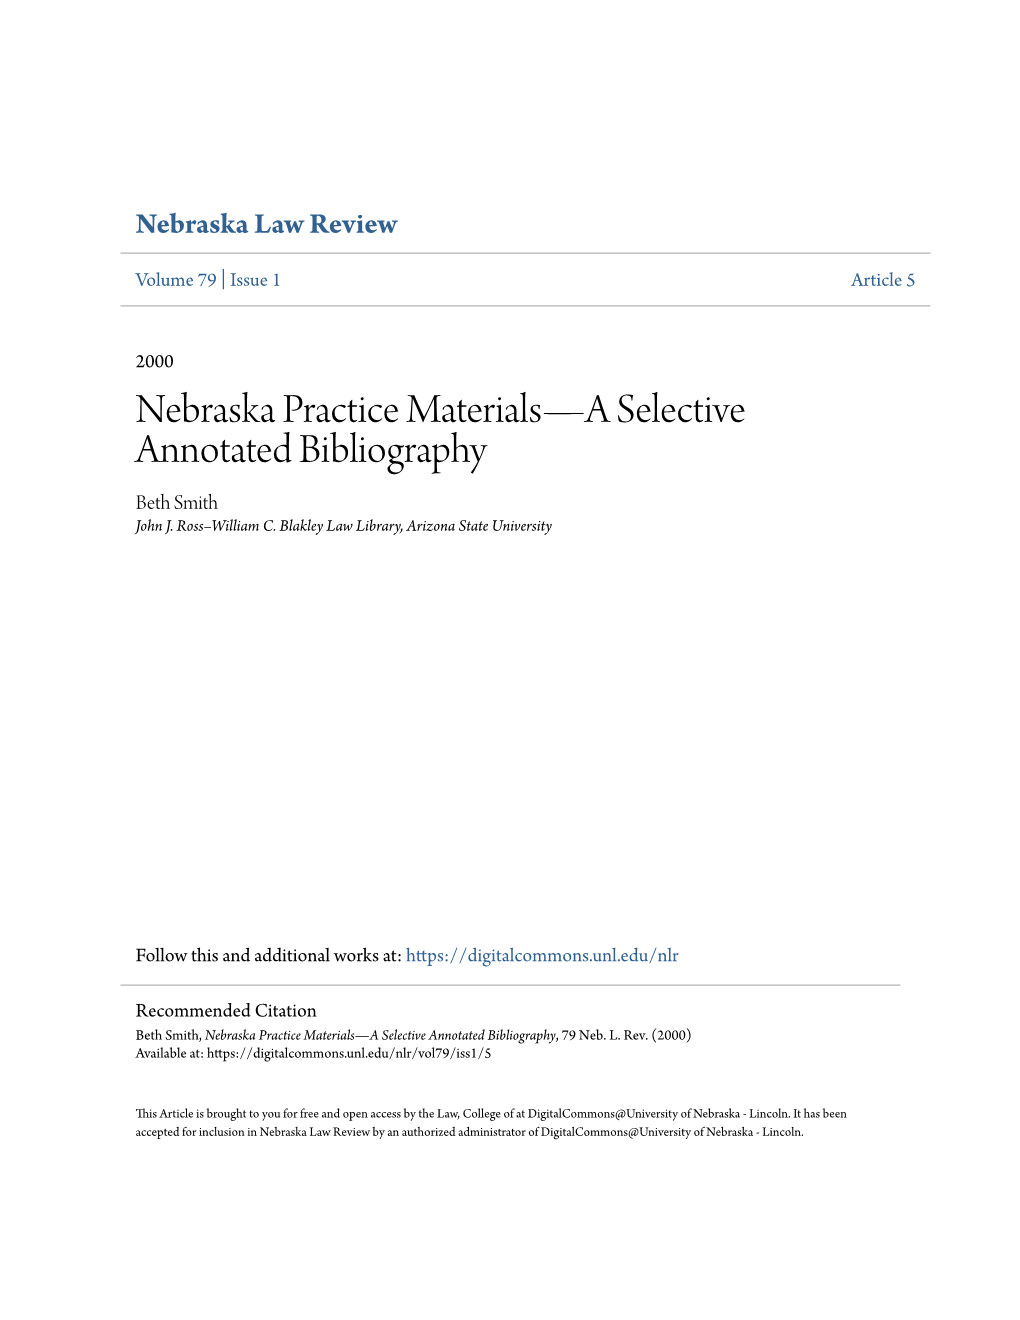 Nebraska Practice Materials—A Selective Annotated Bibliography Beth Smith John J